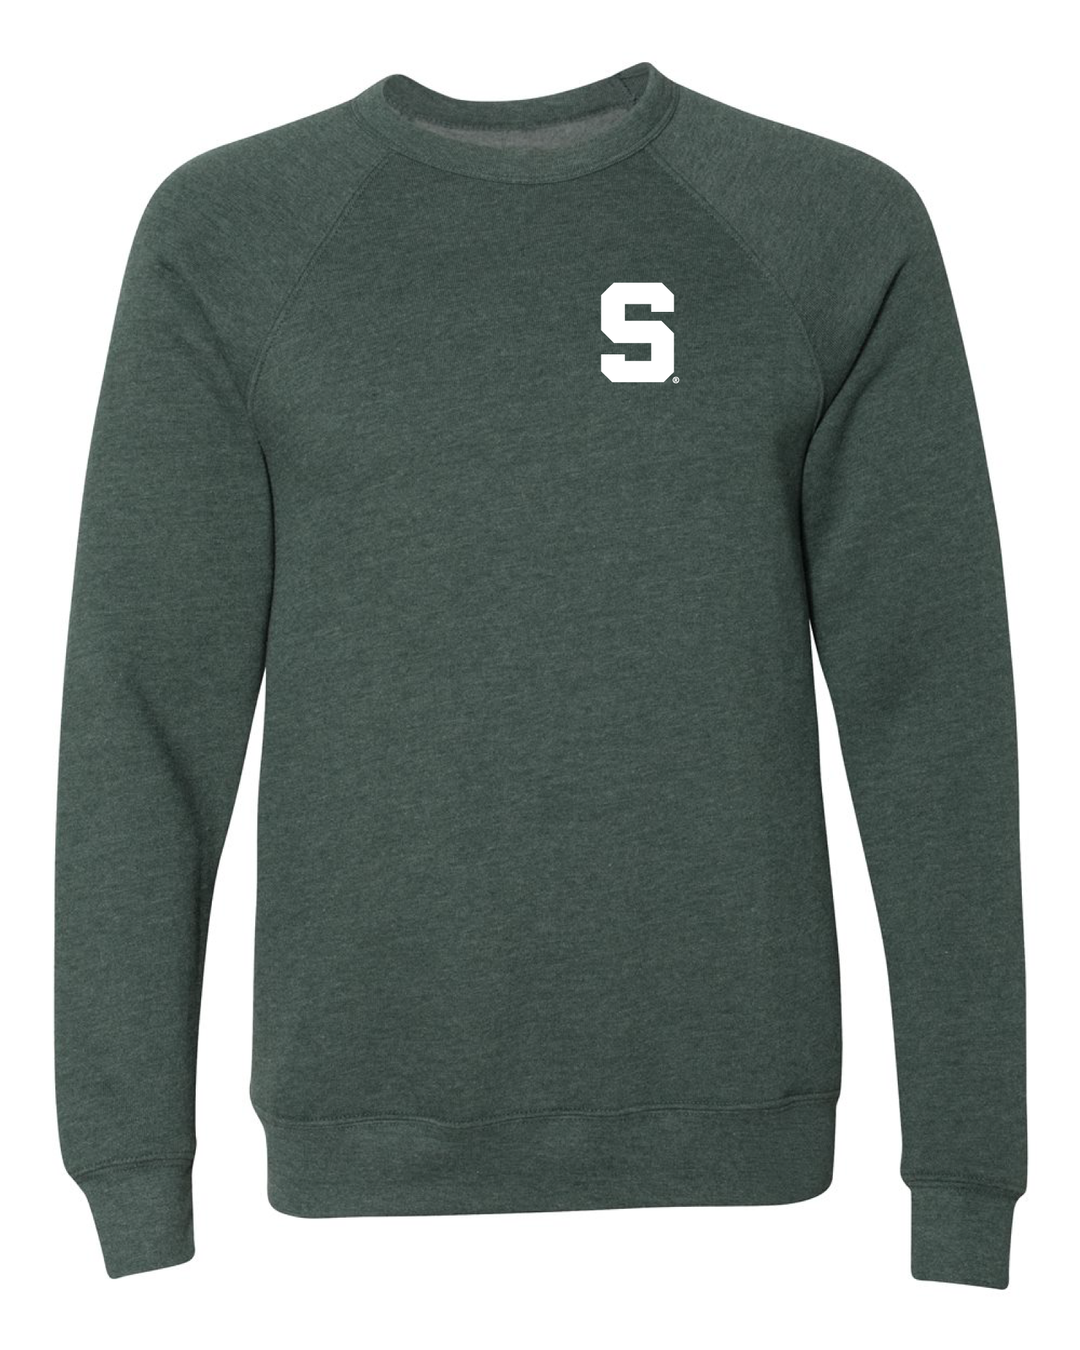 MSU Block S Crewneck Sweatshirt from Nudge Printing